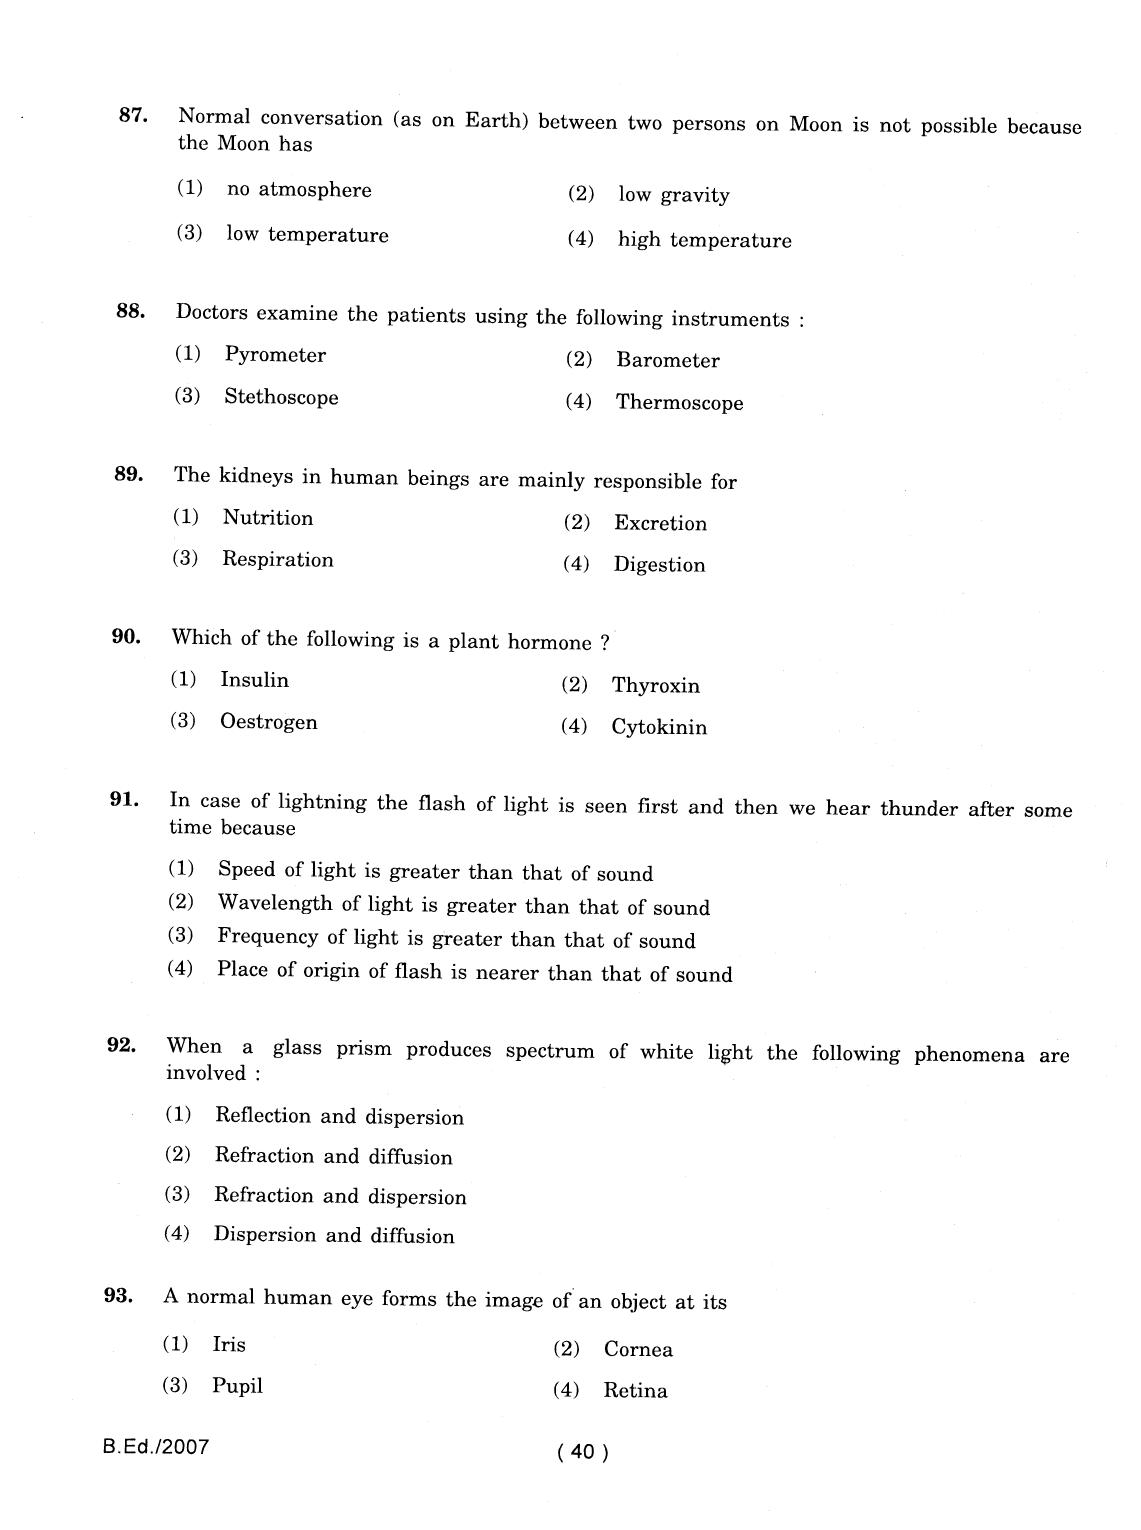 IGNOU B.Ed 2007 Question Paper - Page 40